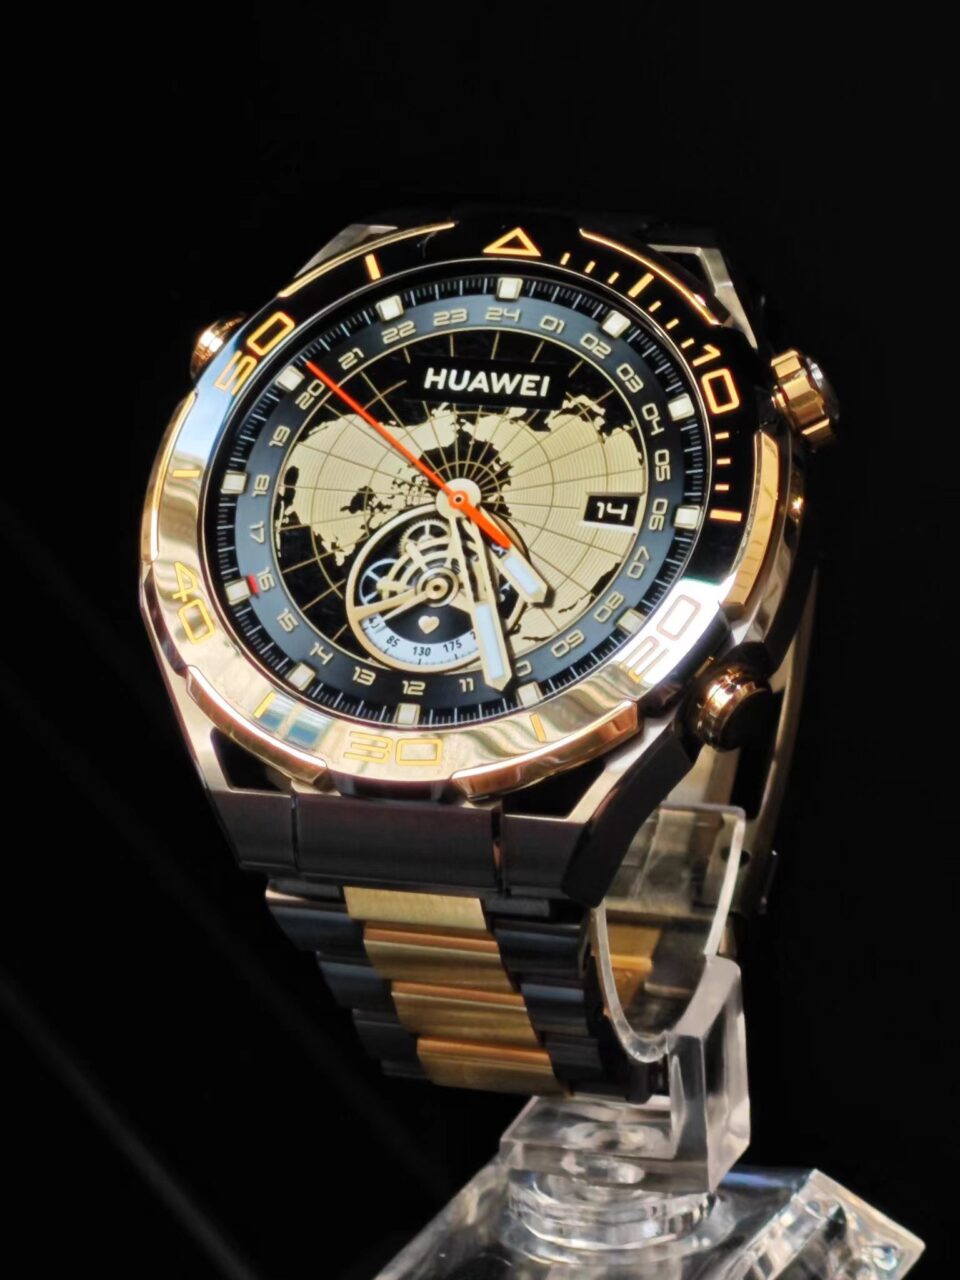 Huawei Watch Ultimate Gold Edition weibo